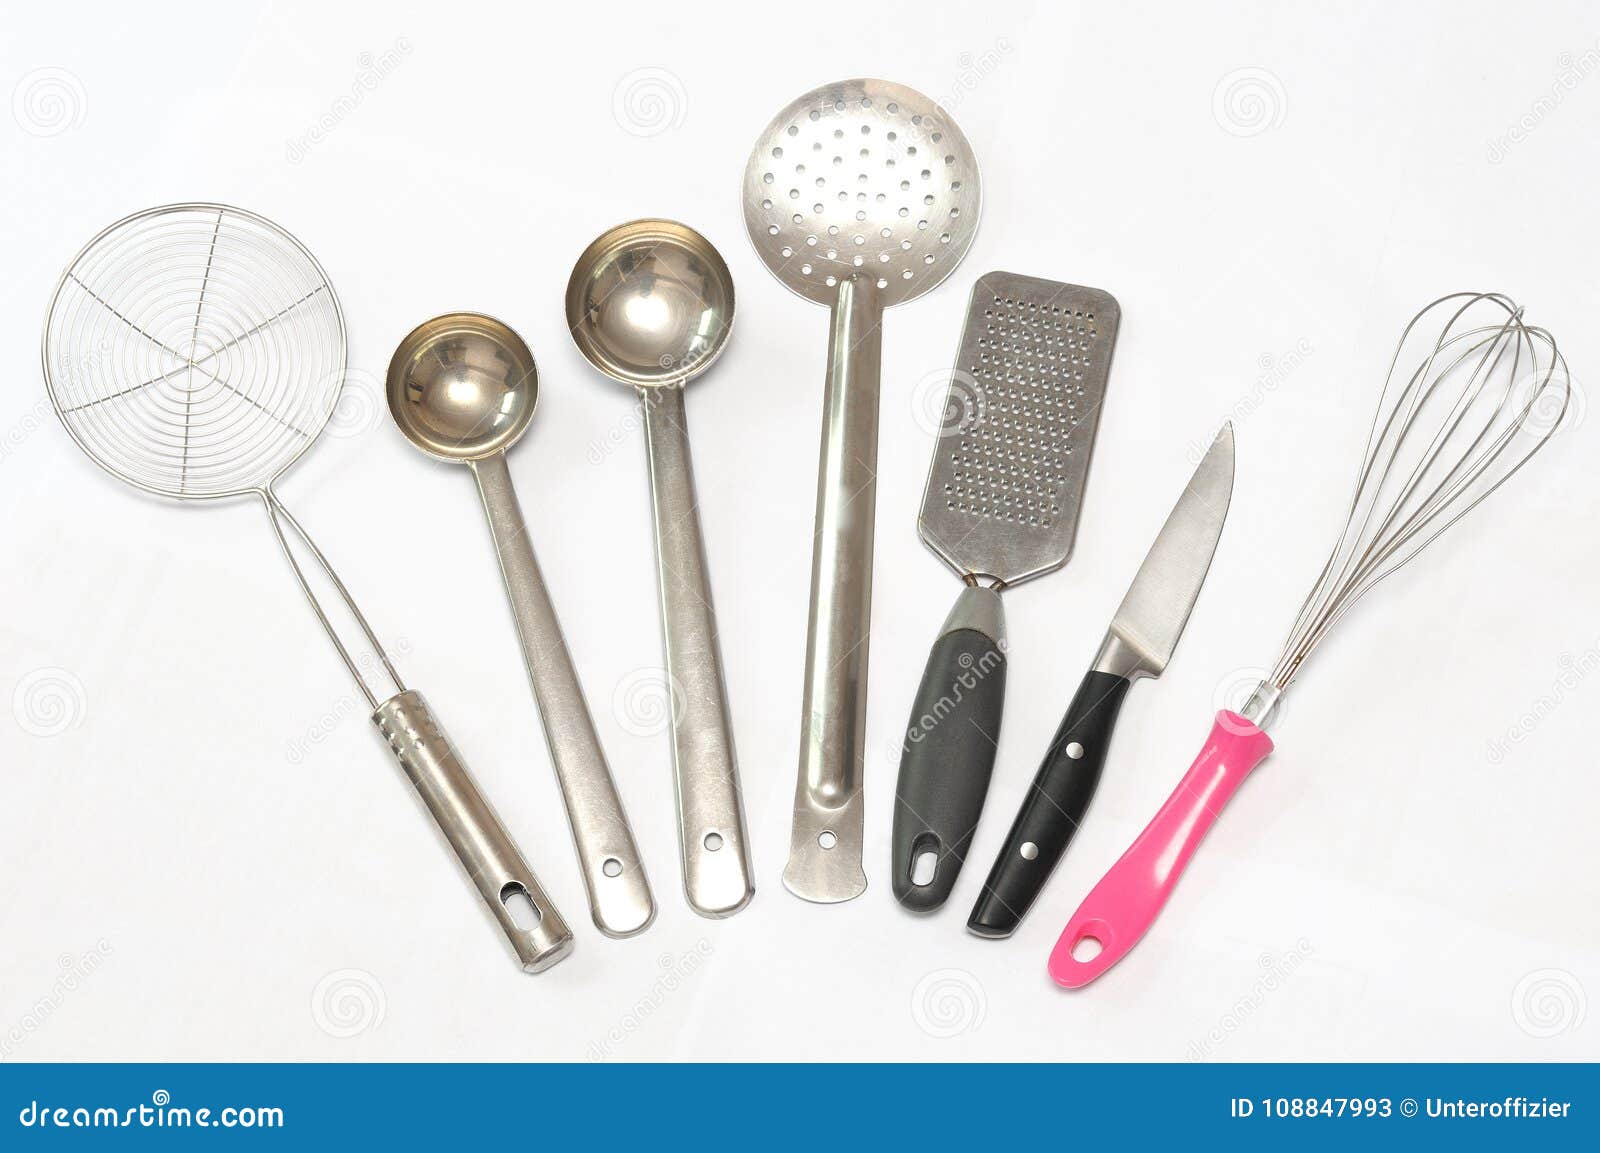 https://thumbs.dreamstime.com/z/few-pieces-kitchen-cooking-utensils-photo-taken-against-white-backdrop-shown-here-skin-peeler-knife-beater-mixer-108847993.jpg